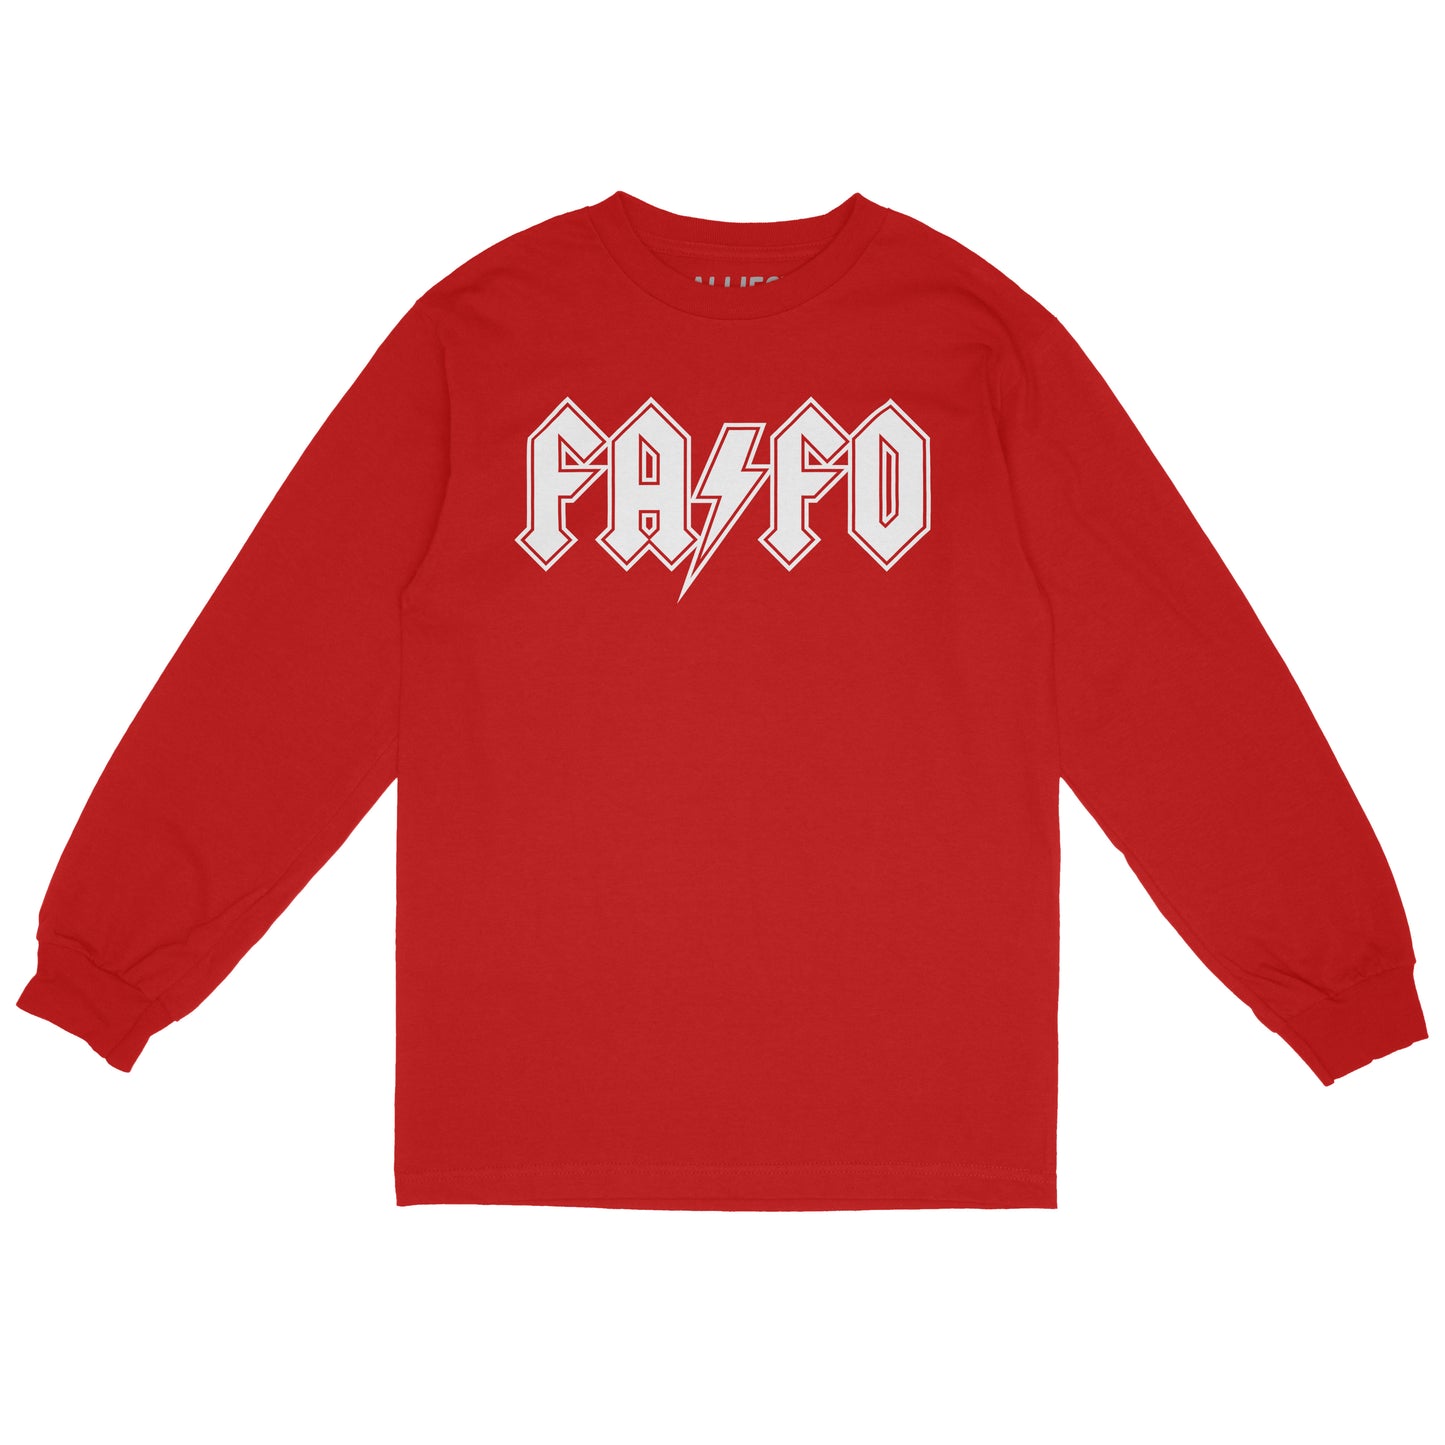 FAFO T-shirt